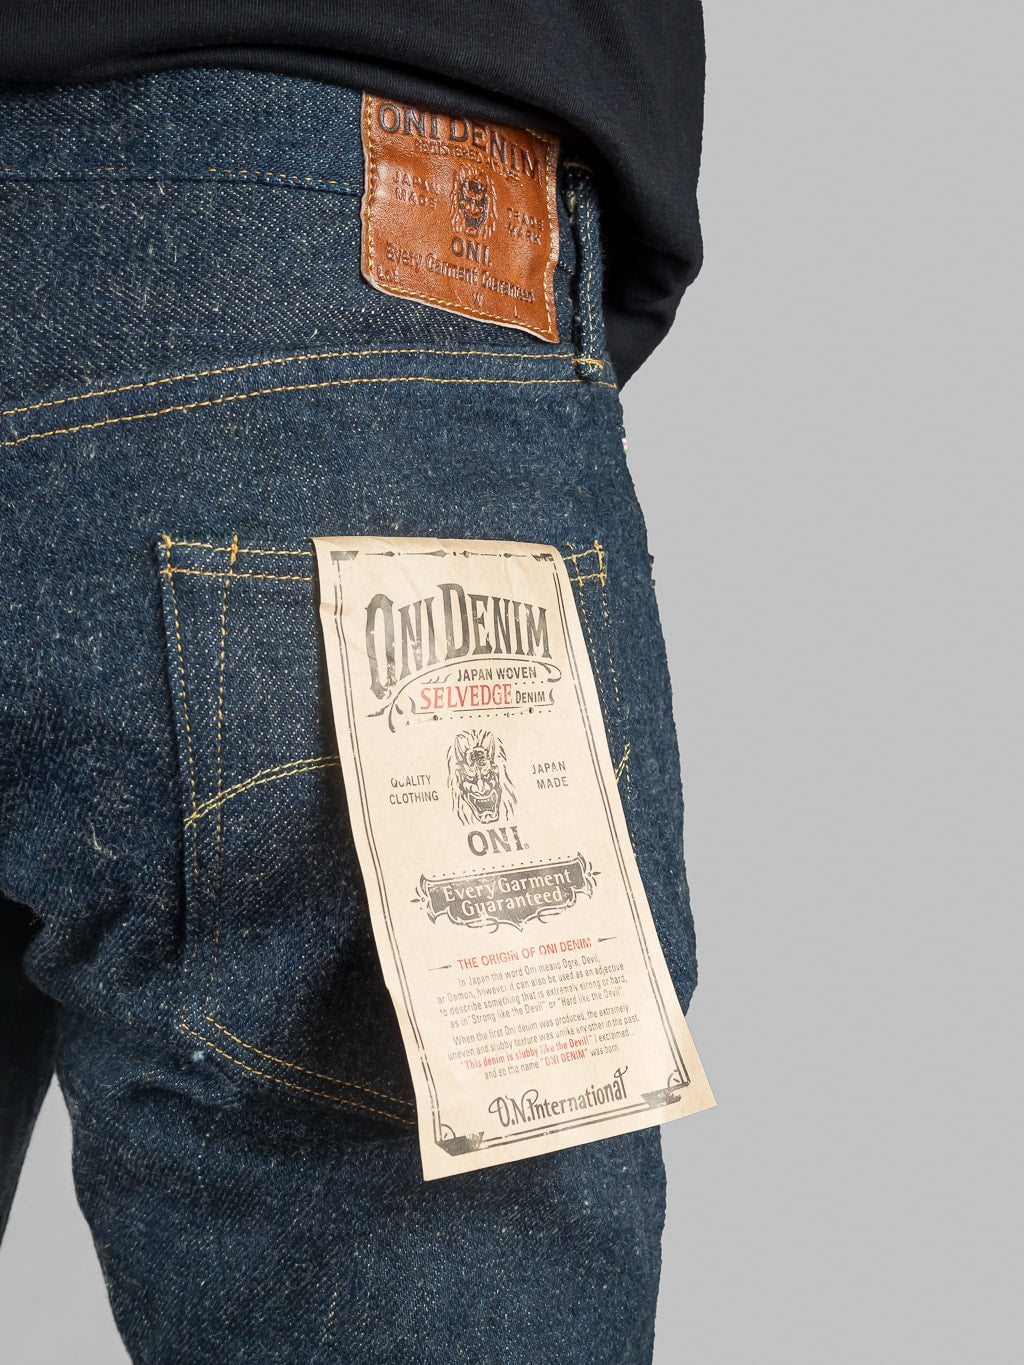 ONI Denim 622ZR Secret Denim 20oz Relaxed Tapered Jeans details